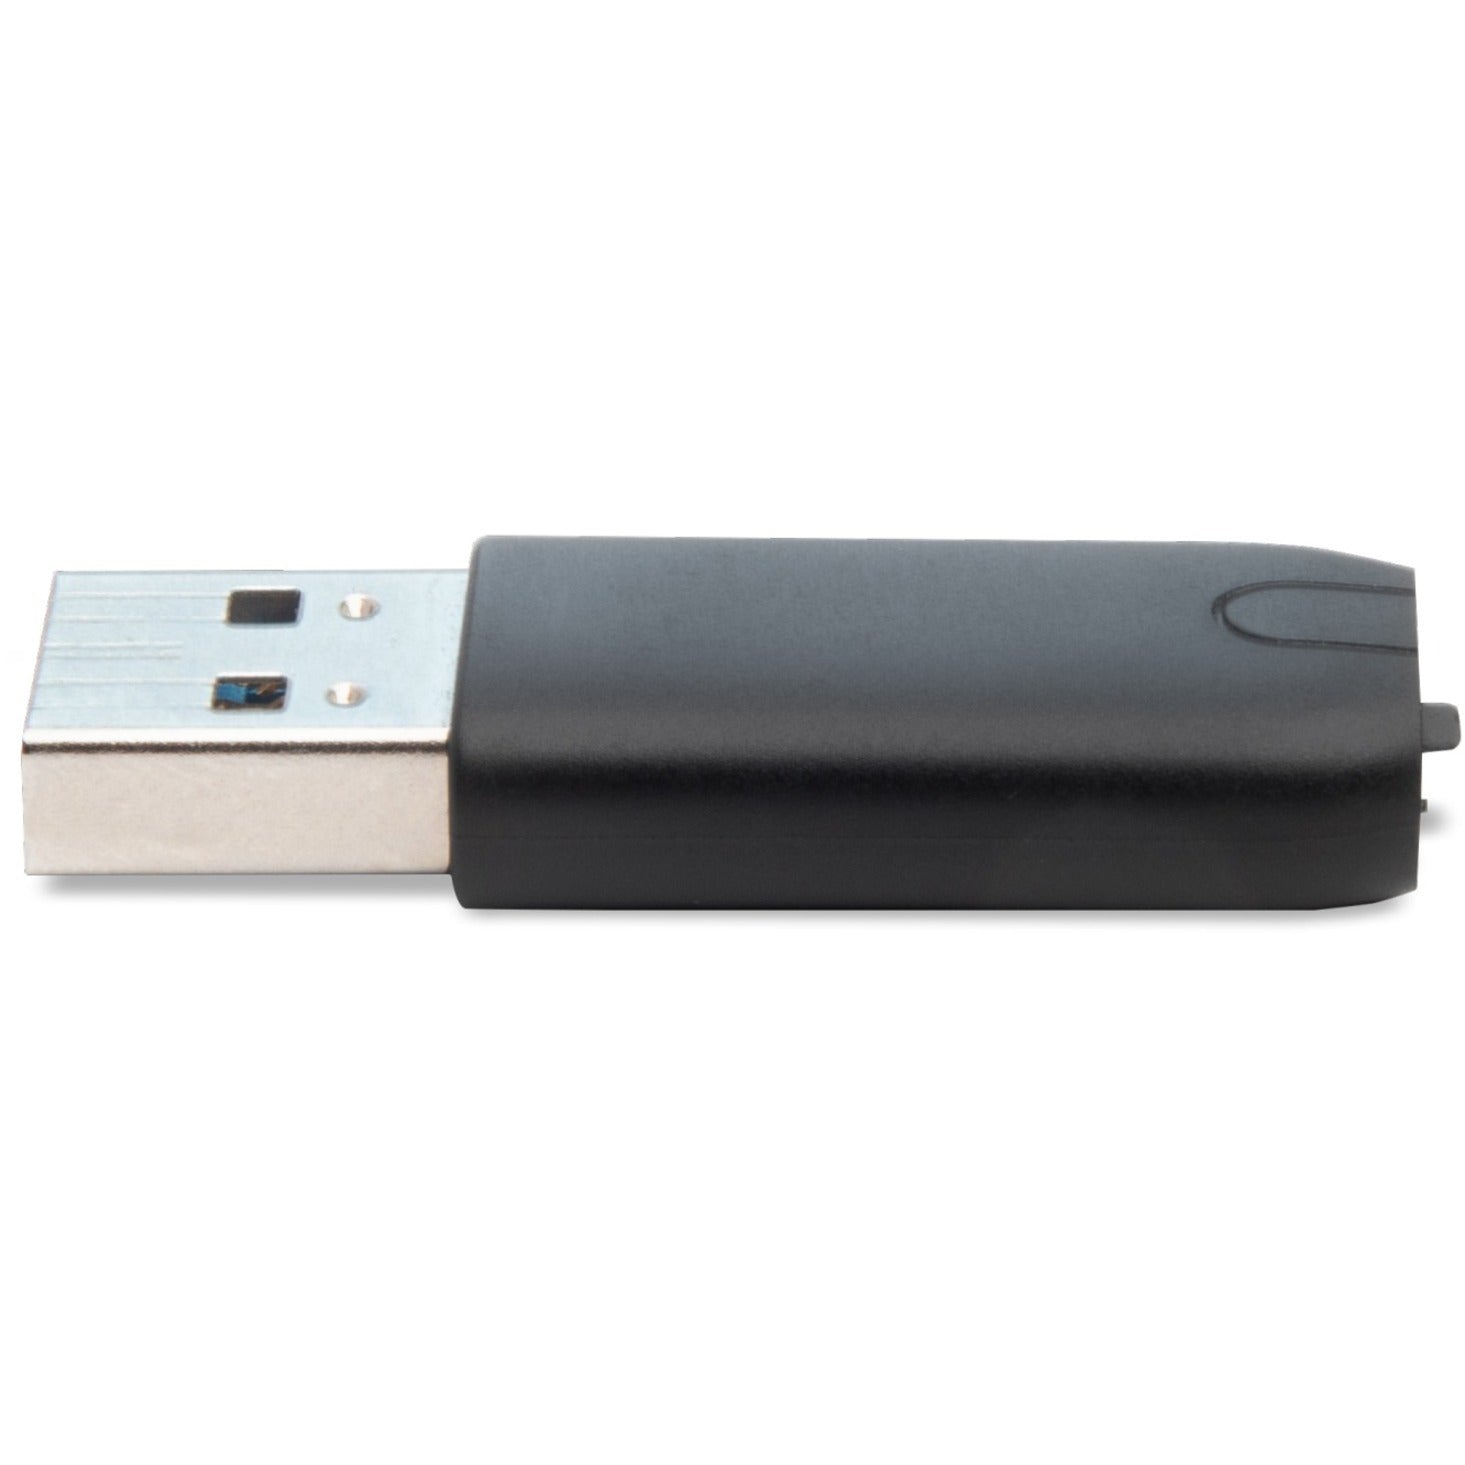 Crucial CTUSBCFUSBAMAD USB-C to USB-A Adapter データ転送アダプター ブランド名: Crucial、ブランド名の翻訳: 重要